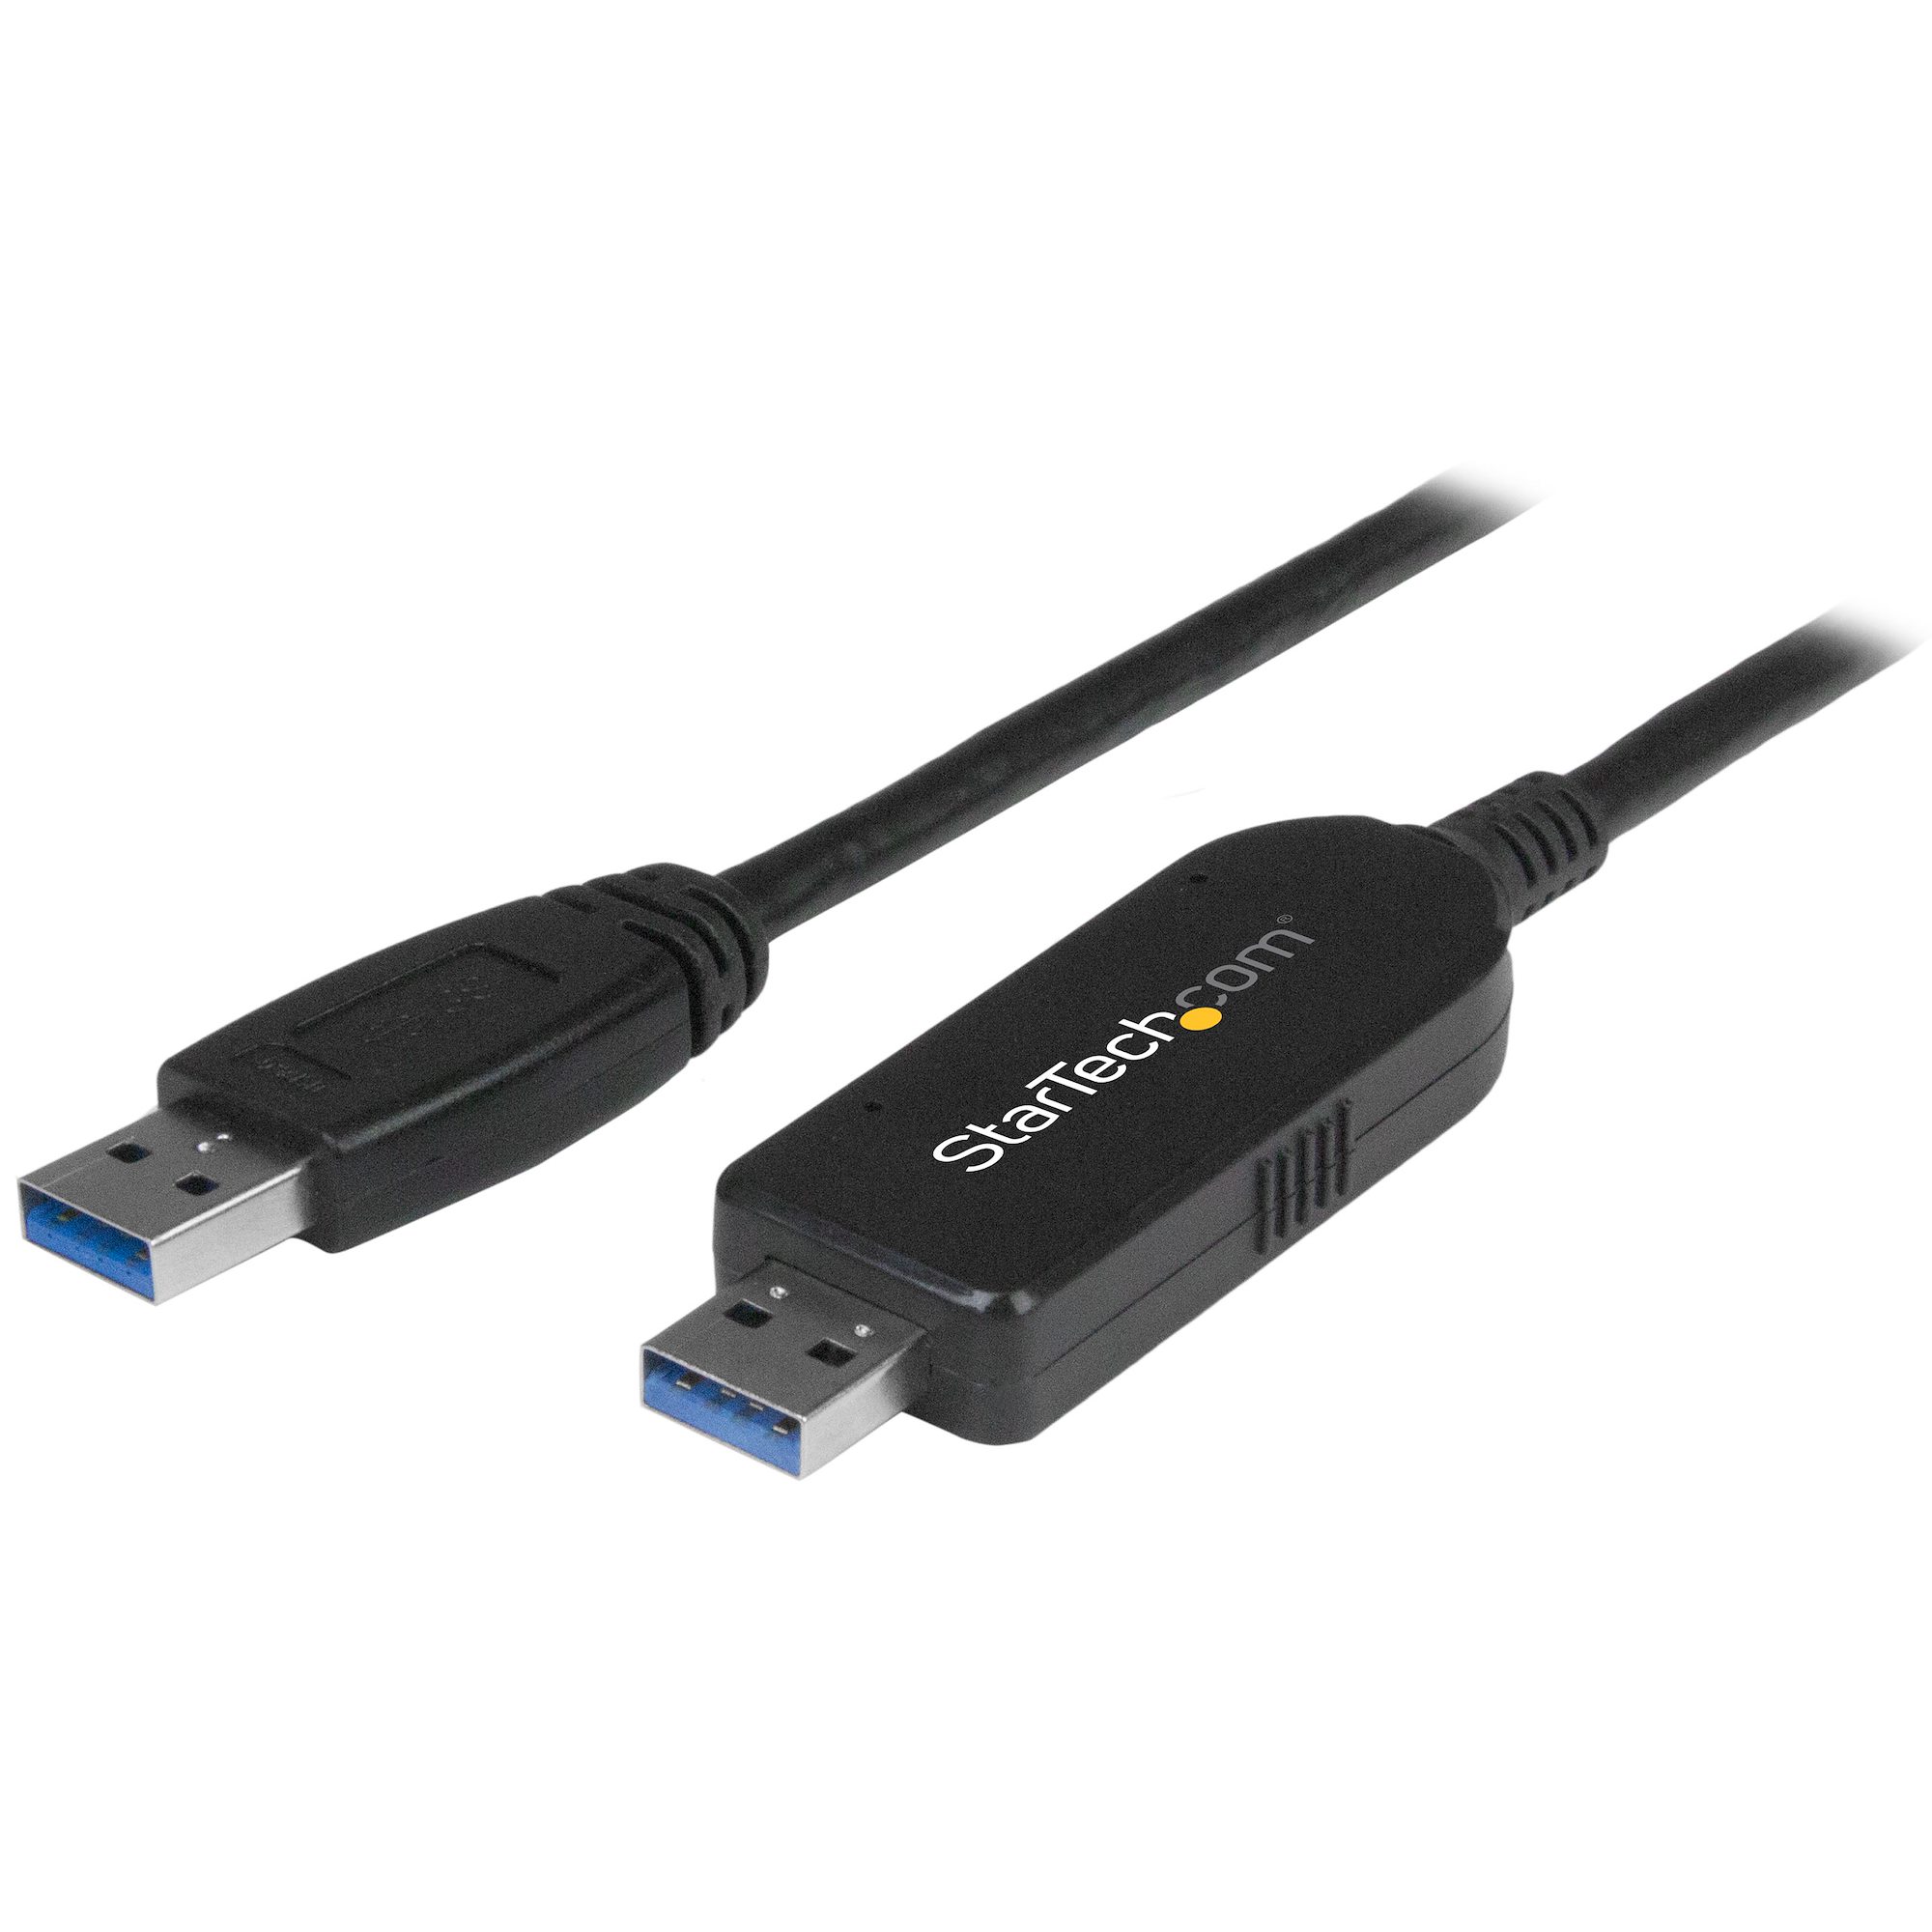 USB 3.0(5 Gbps) データリンクケーブル Mac/Windows対応 USB  PS/2デバイス 日本